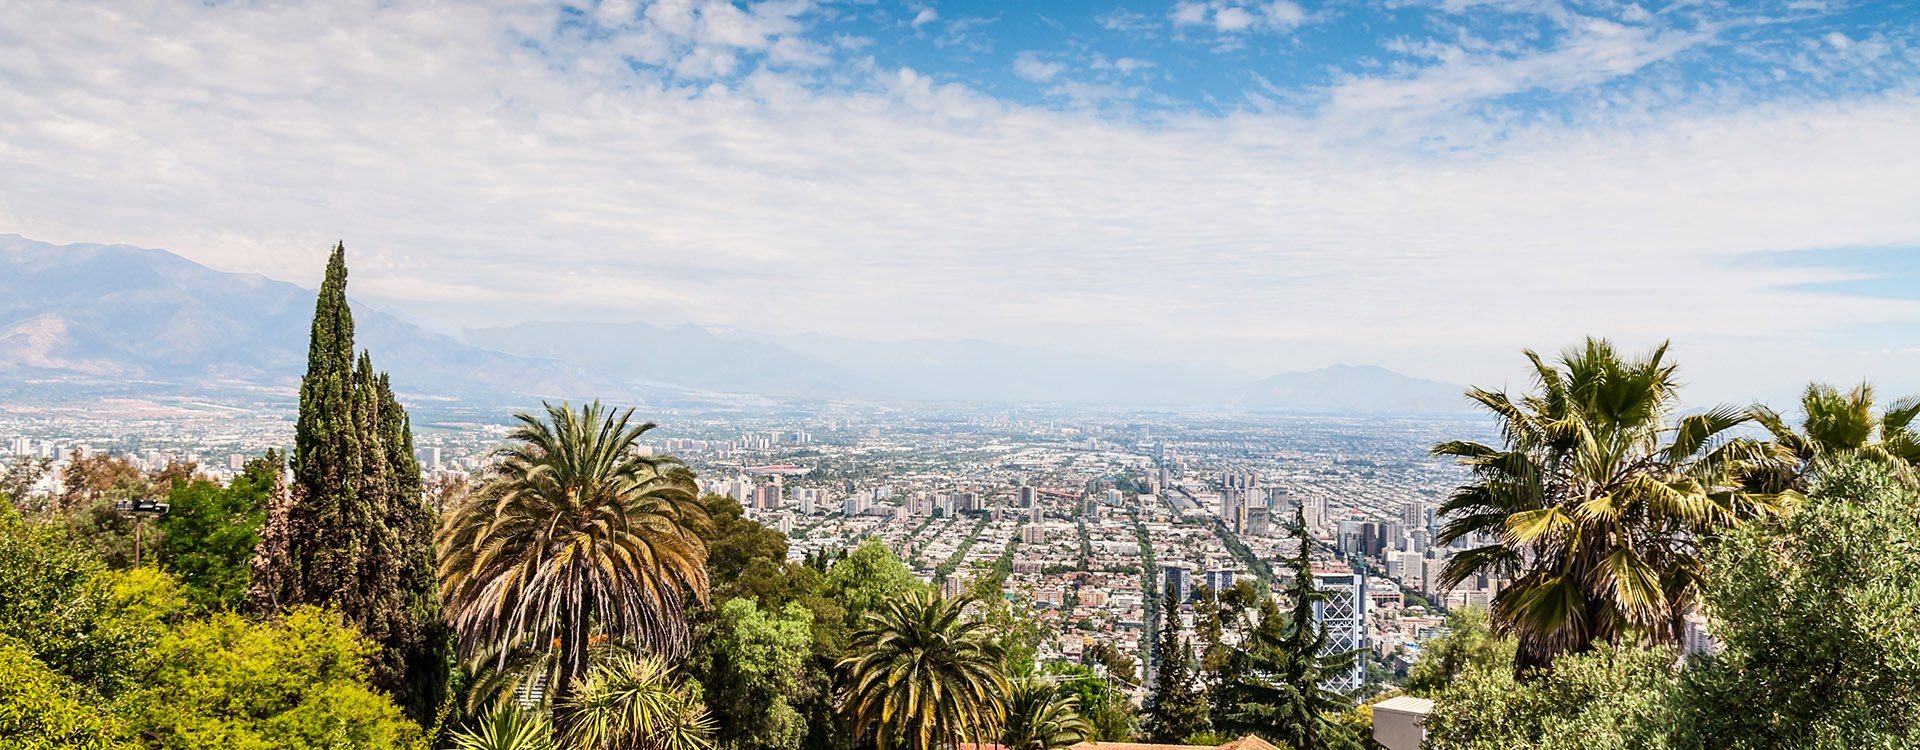 High angle view of Santiago de Chile from Cerro San Cristobal